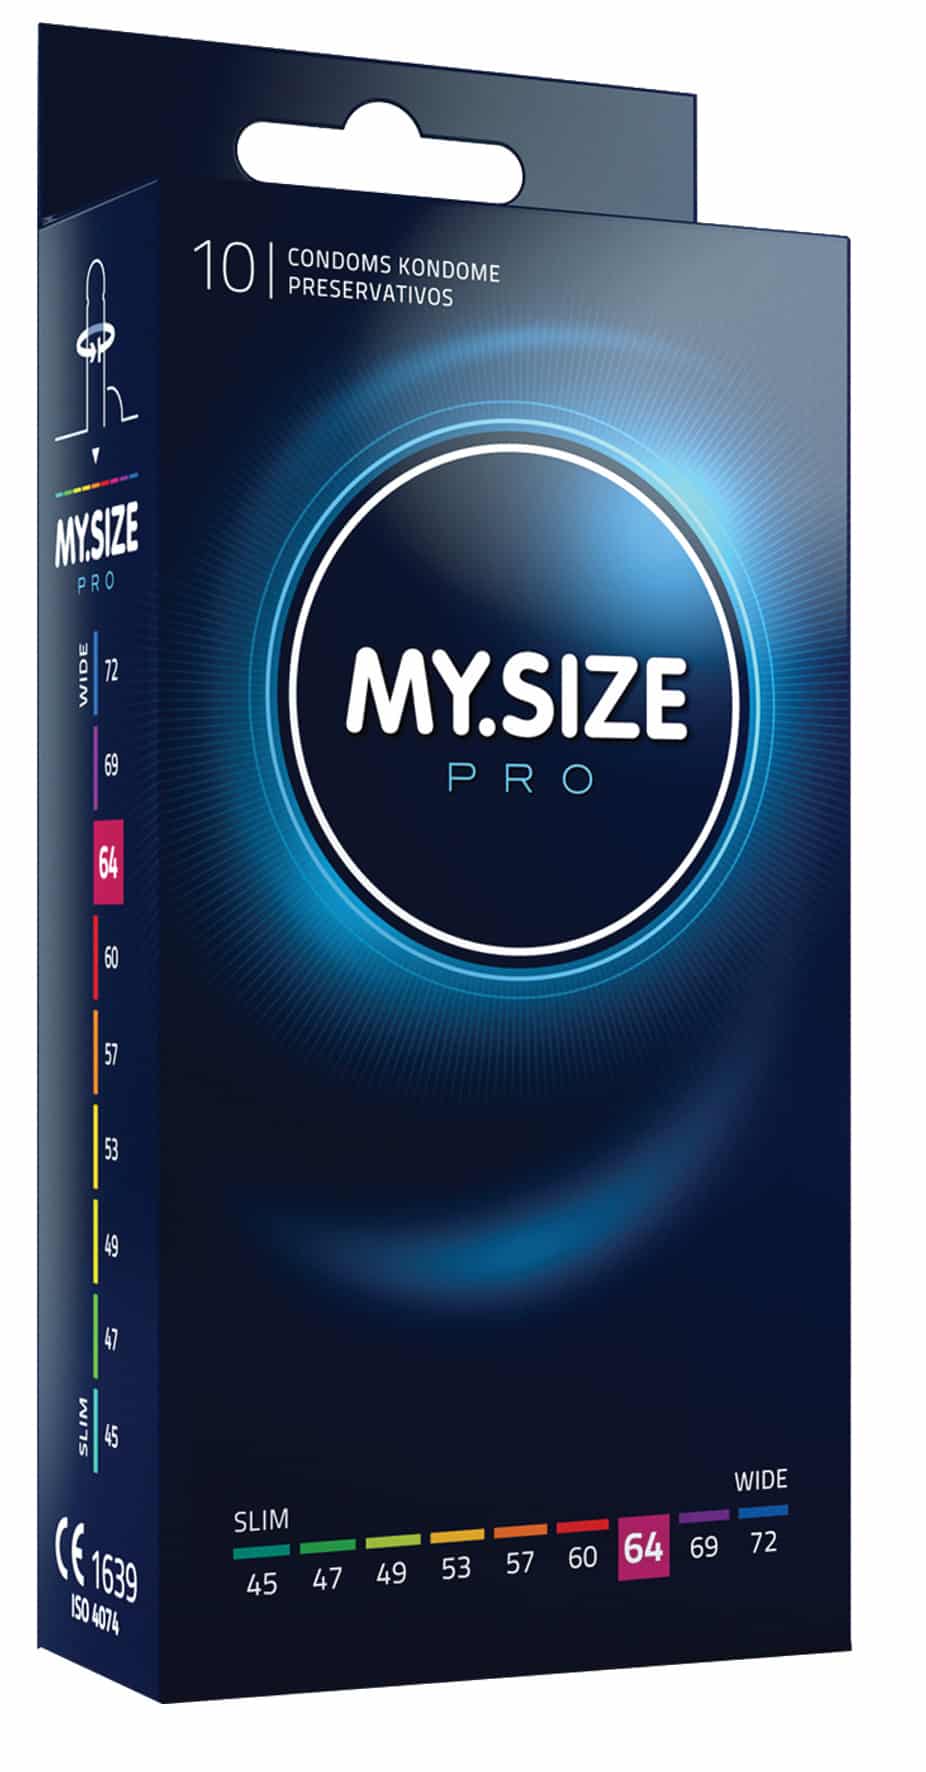 MY.SIZE PRO 64 (10 Kondome)